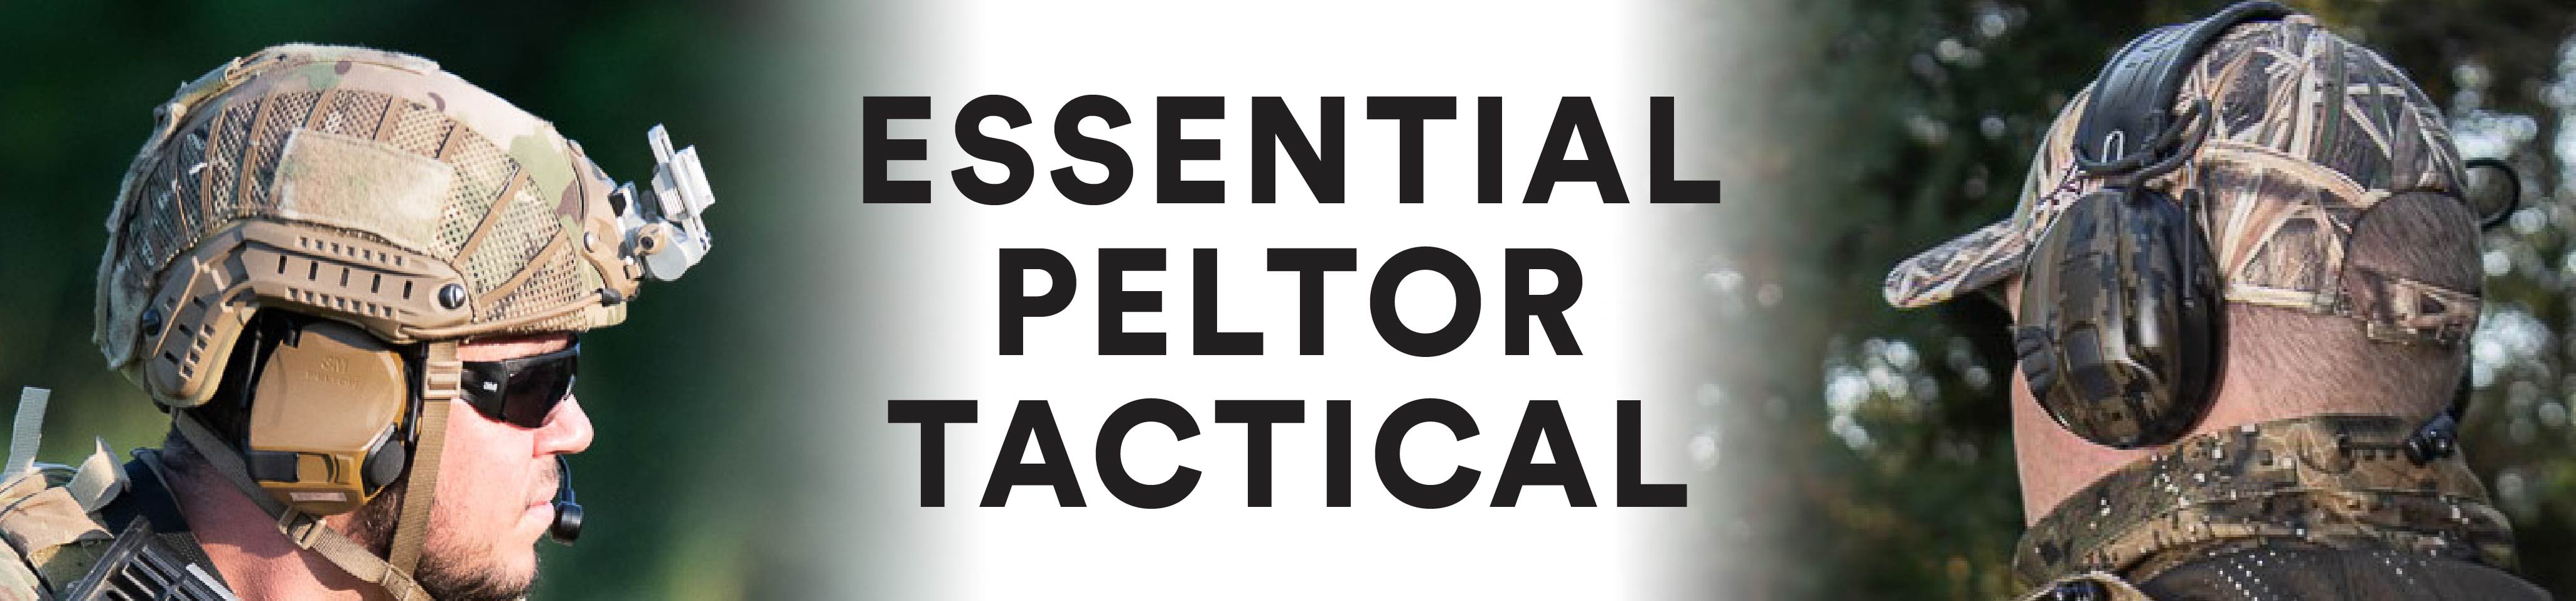 Essential Peltor Tactical